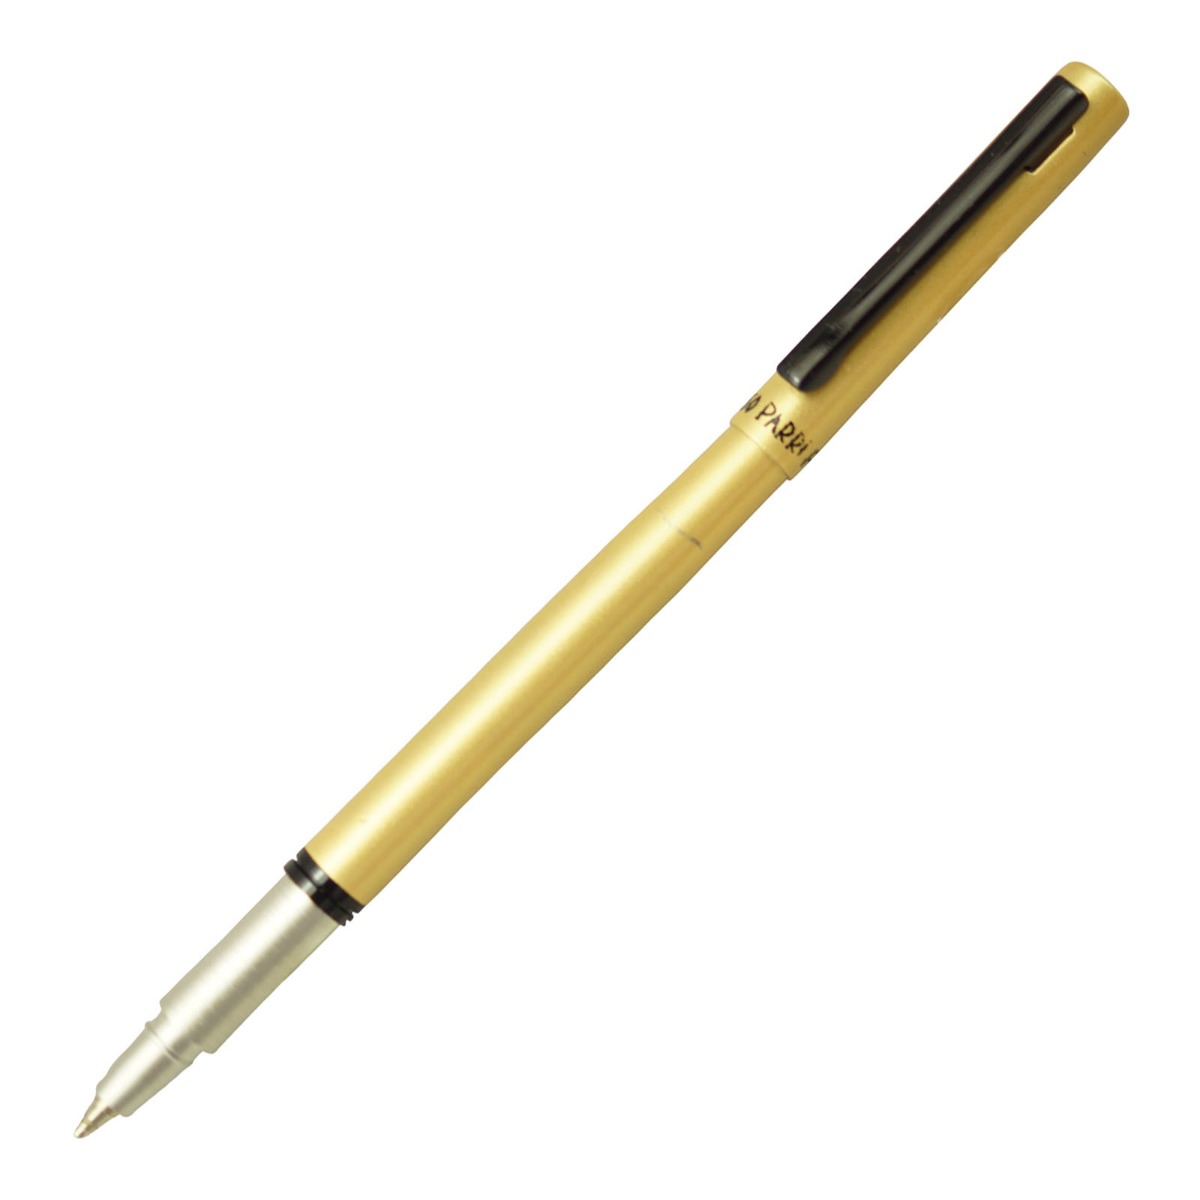 Picasso Parri Fly Model No:17031 Slim Golden Yellow  Color Body Wilth Black Clip Fine Tip  Cap Type Ball Pen